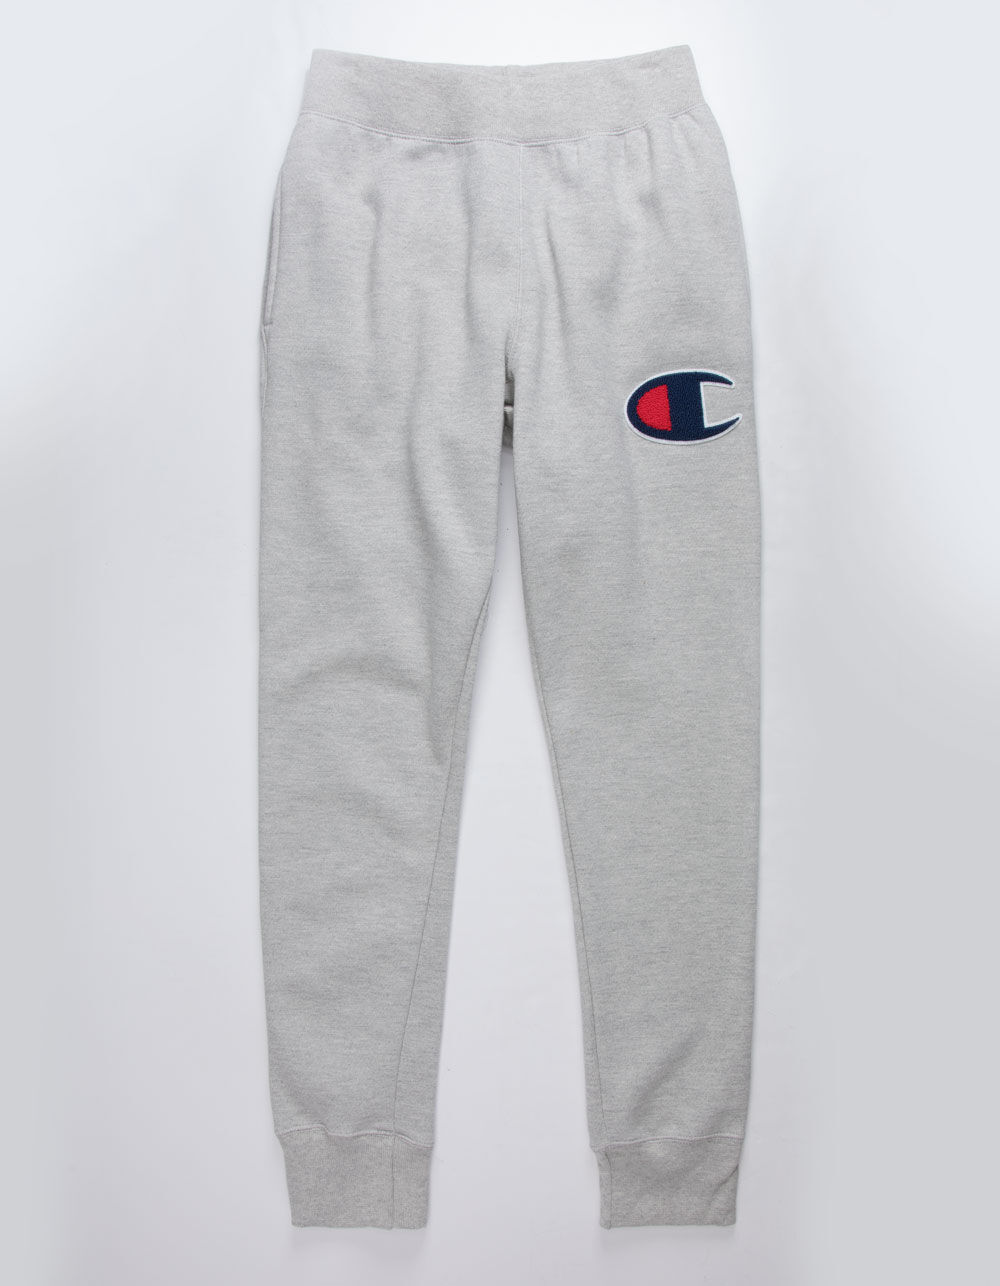 Dark Grey Champion Sweatpants Mens L Baggy Fit Embroidered Logo